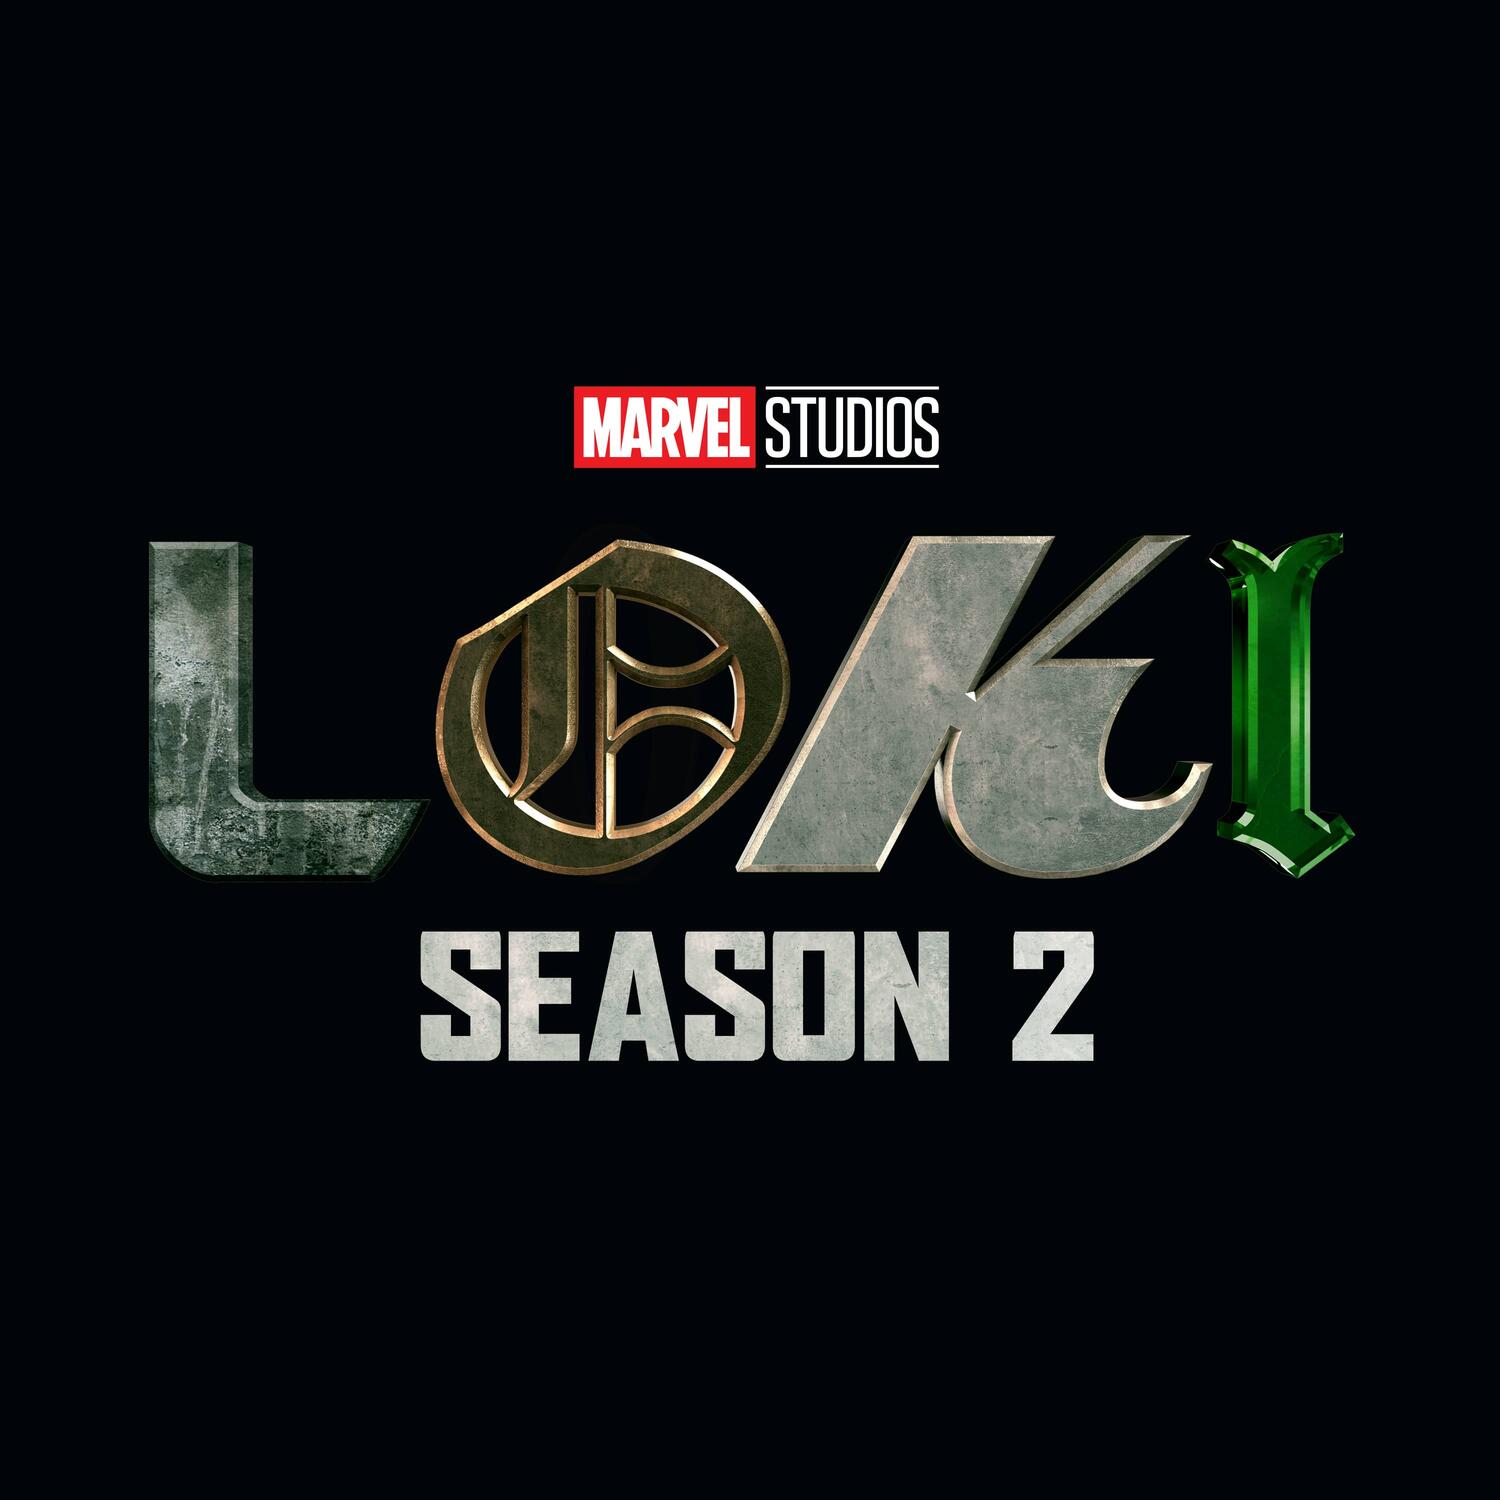 Loki Season 2 announced at San Diego Comic Con